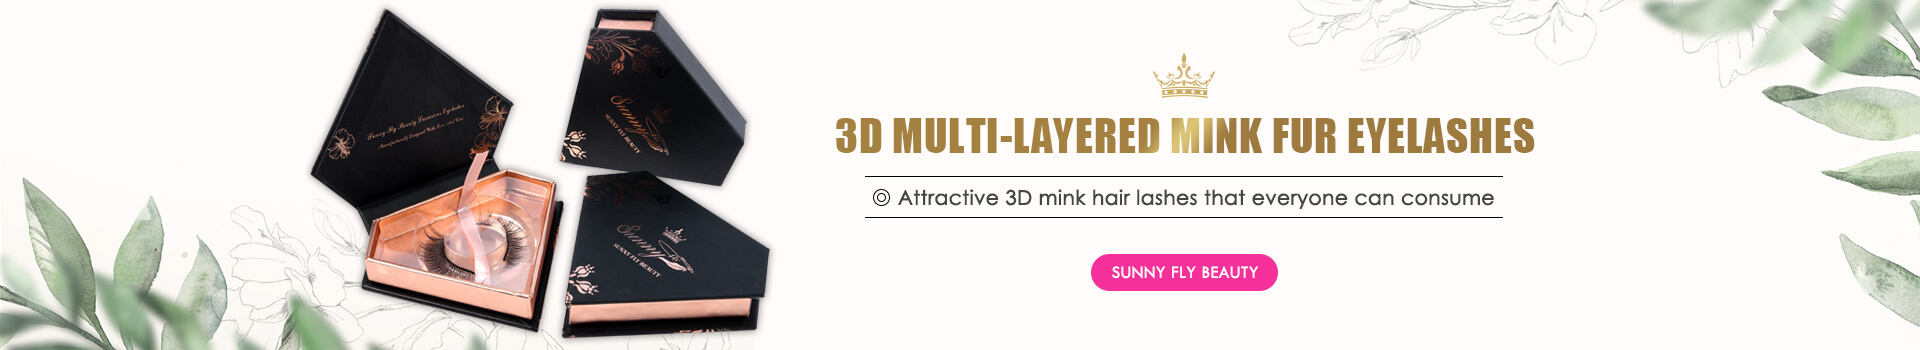 3D Multi-layered Mink Fur Eyelashes MG10